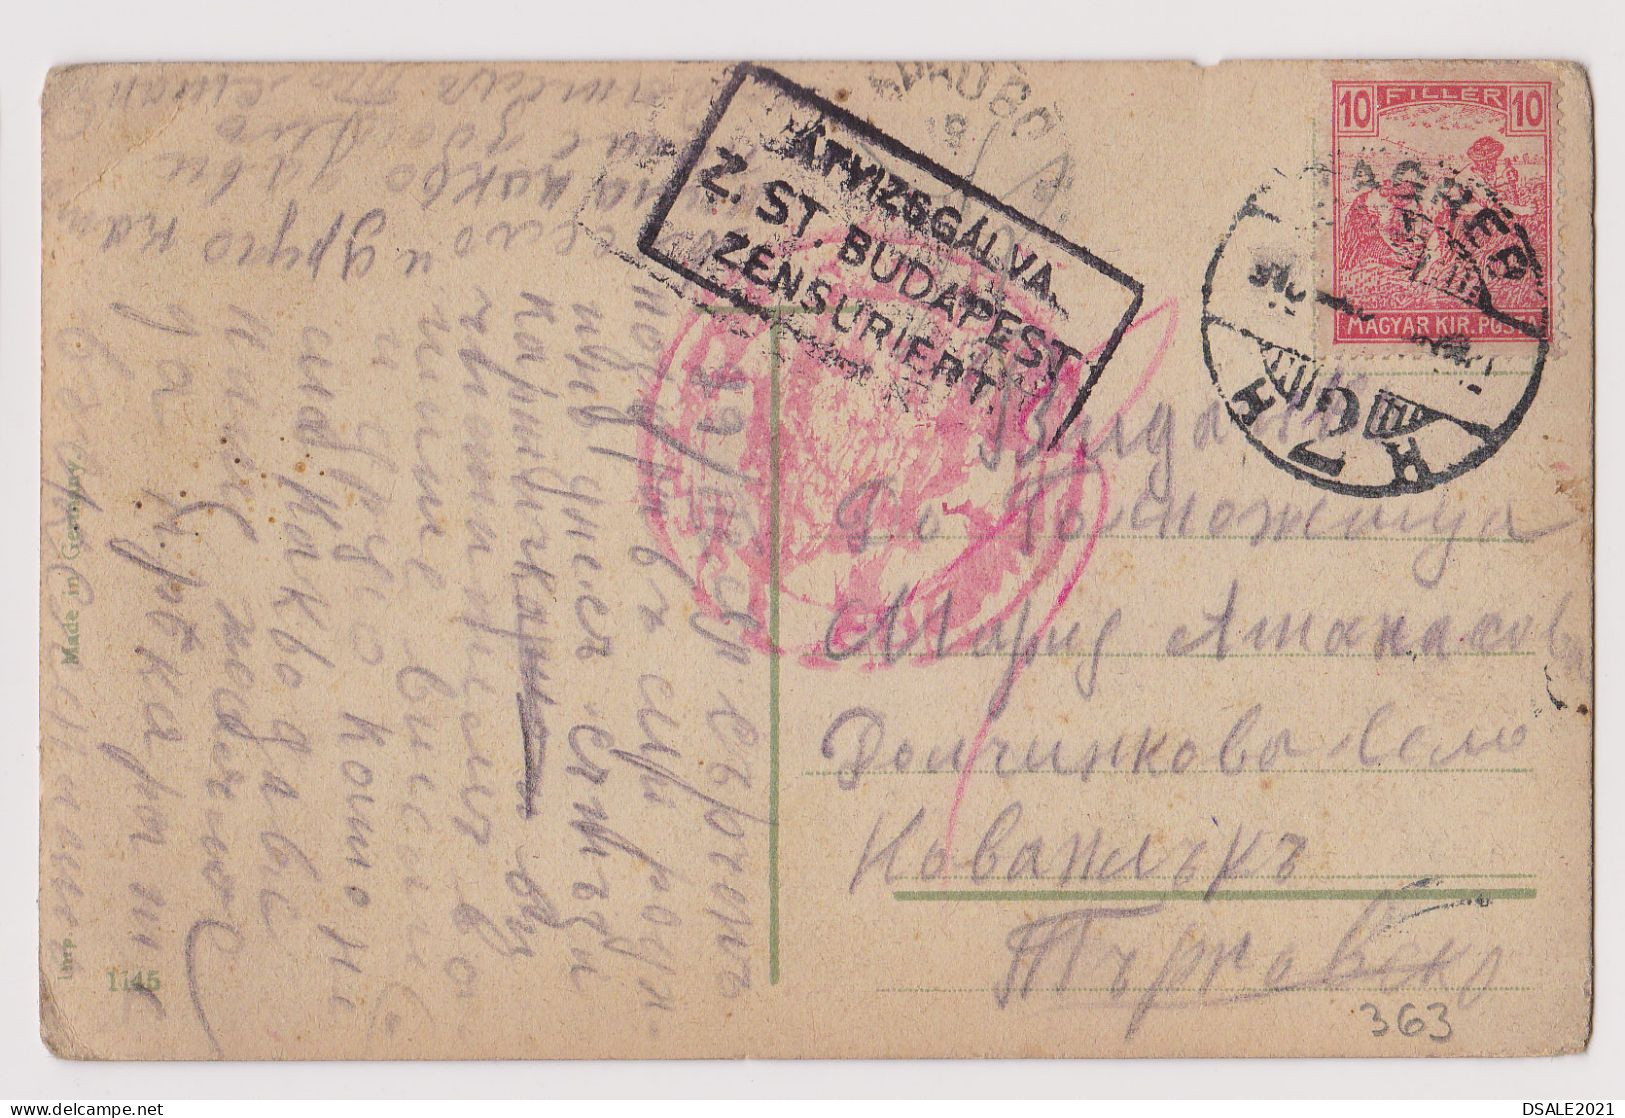 Hungary Croatia Ww1 Postcard Sent ZAGREB Censored BUDAPEST To Bulgaria Sofia Civil Censored Cachet (363) - Storia Postale